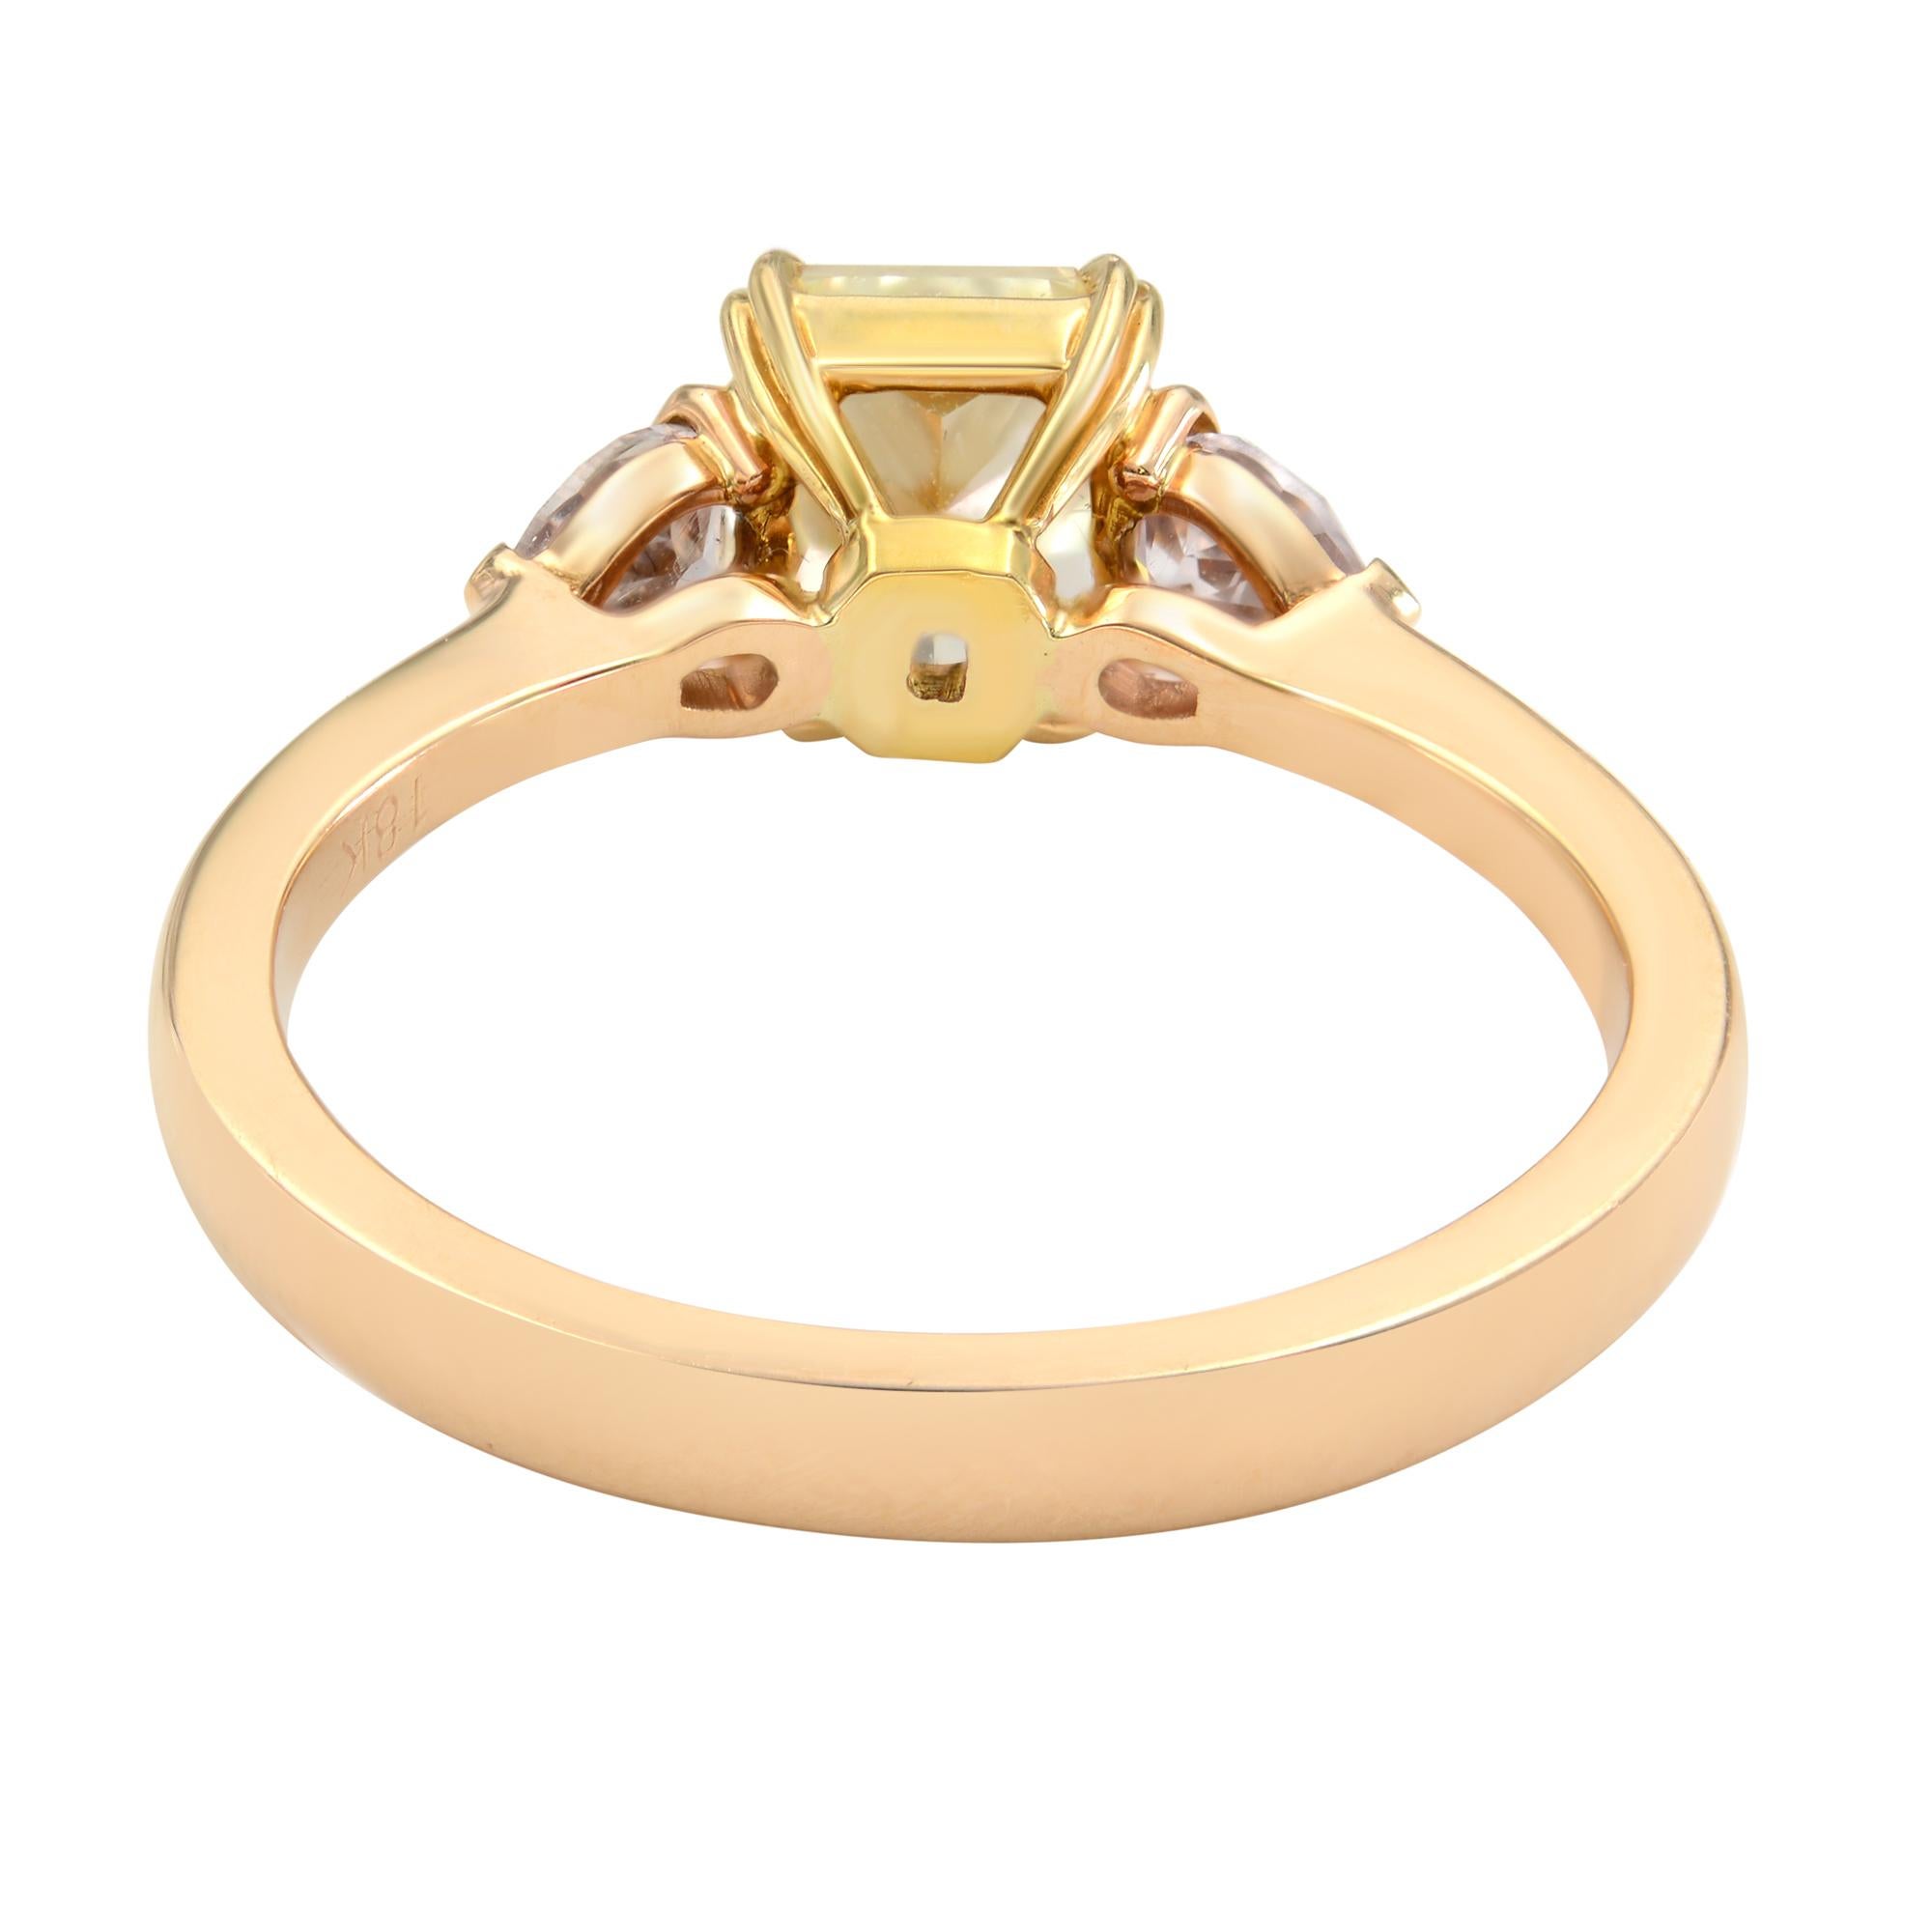 Modern Rachel Koen 18K Yellow Gold Asscher and Pear Shaped Three-Stone Ring 1.37 Carat For Sale